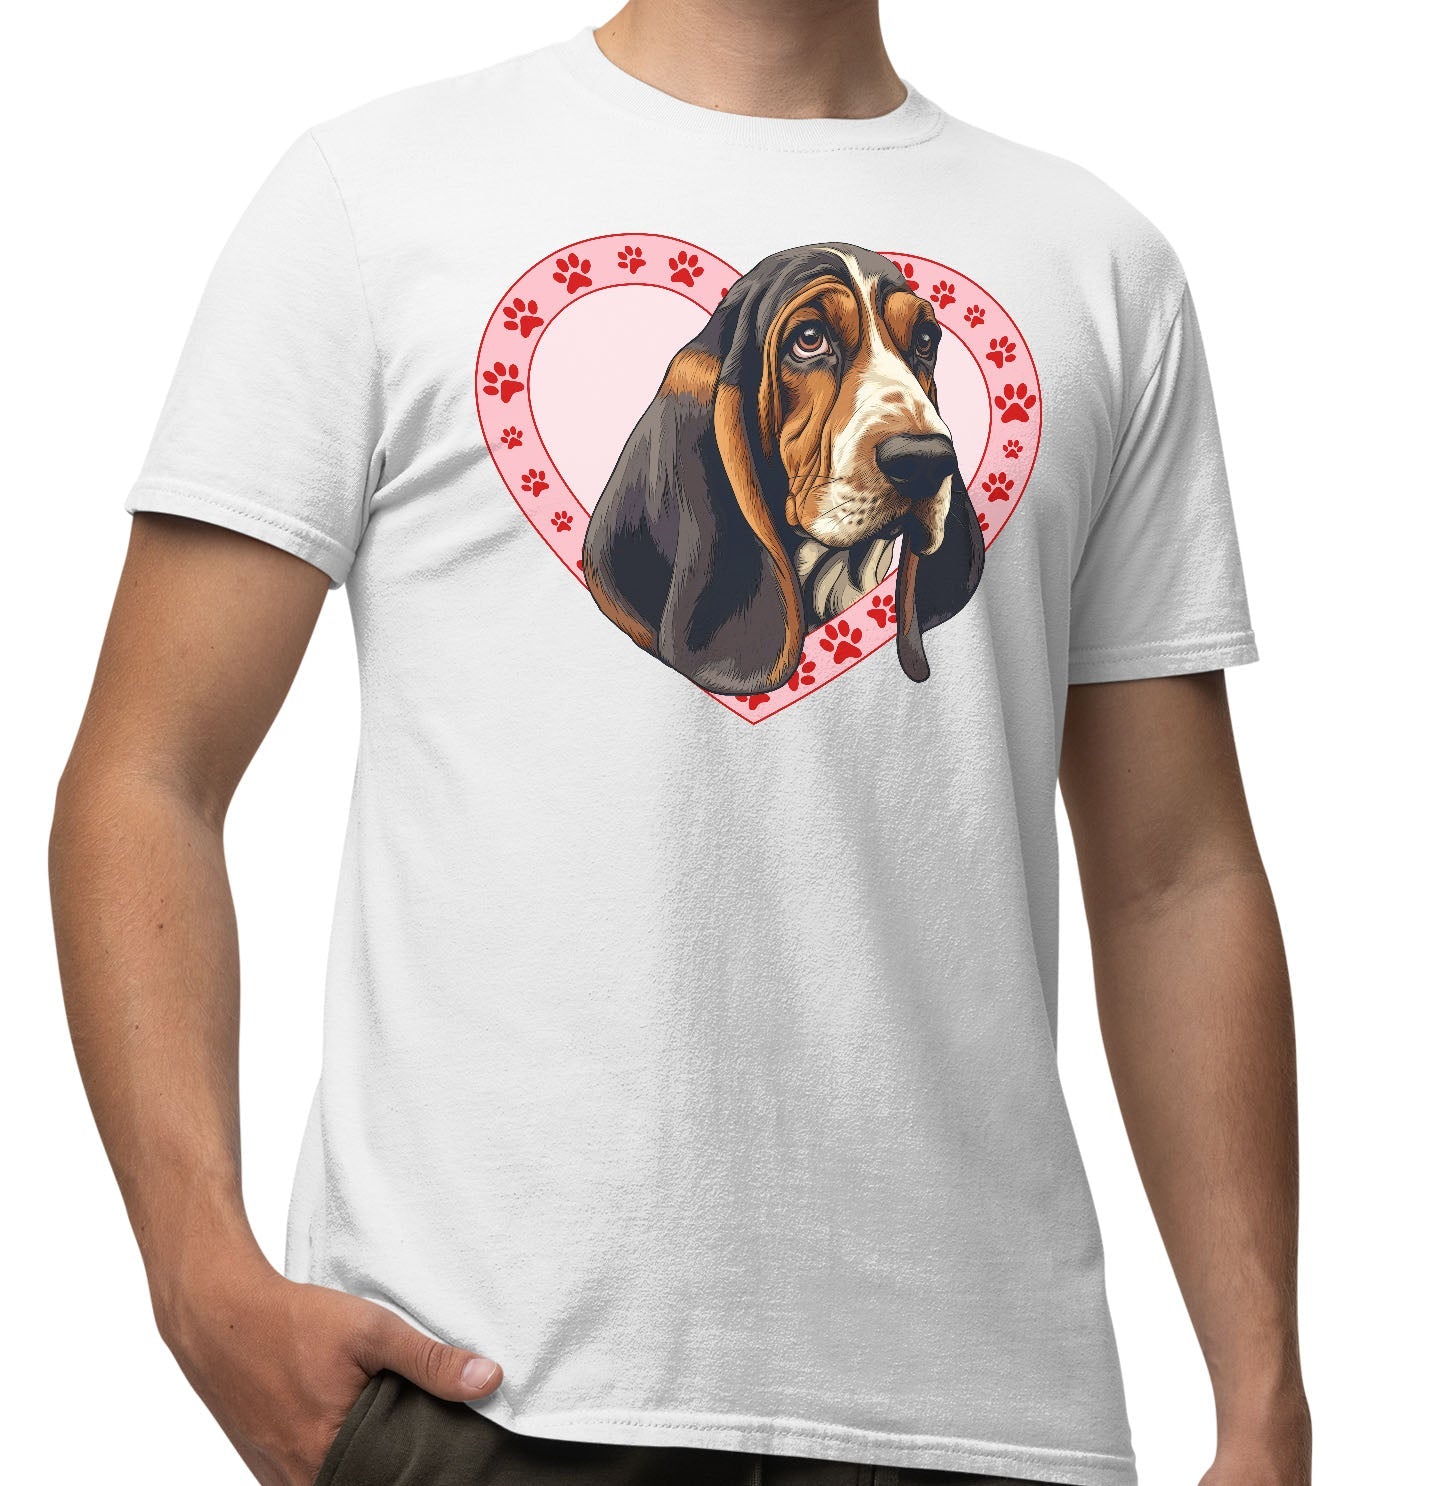 Basset Hound (Black, Brown & White) Illustration In Heart - Adult Unisex T-Shirt